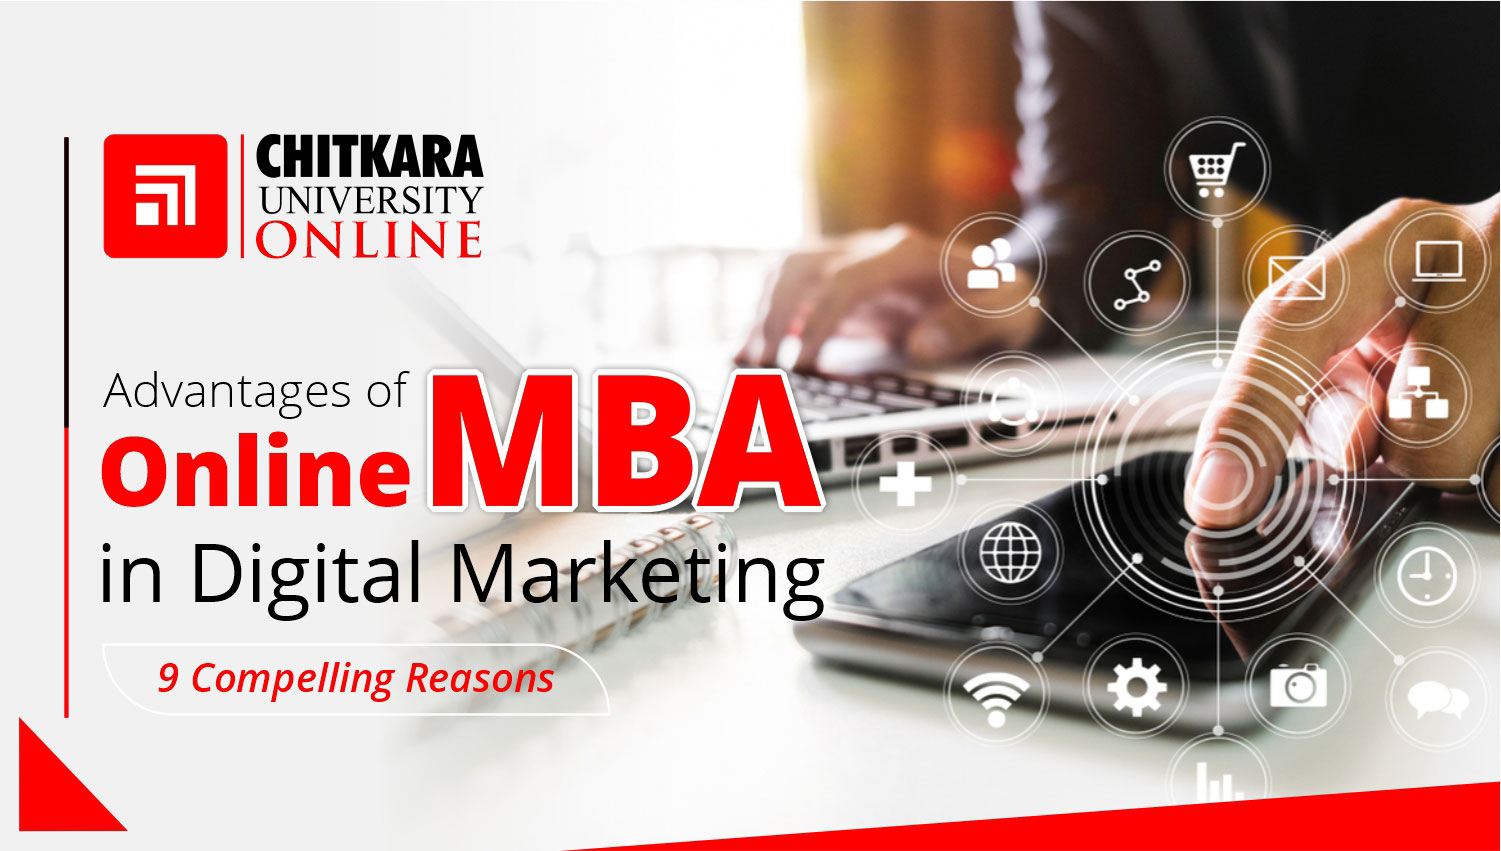 Online MBA in Digital Marketing - ChitkaraU Online